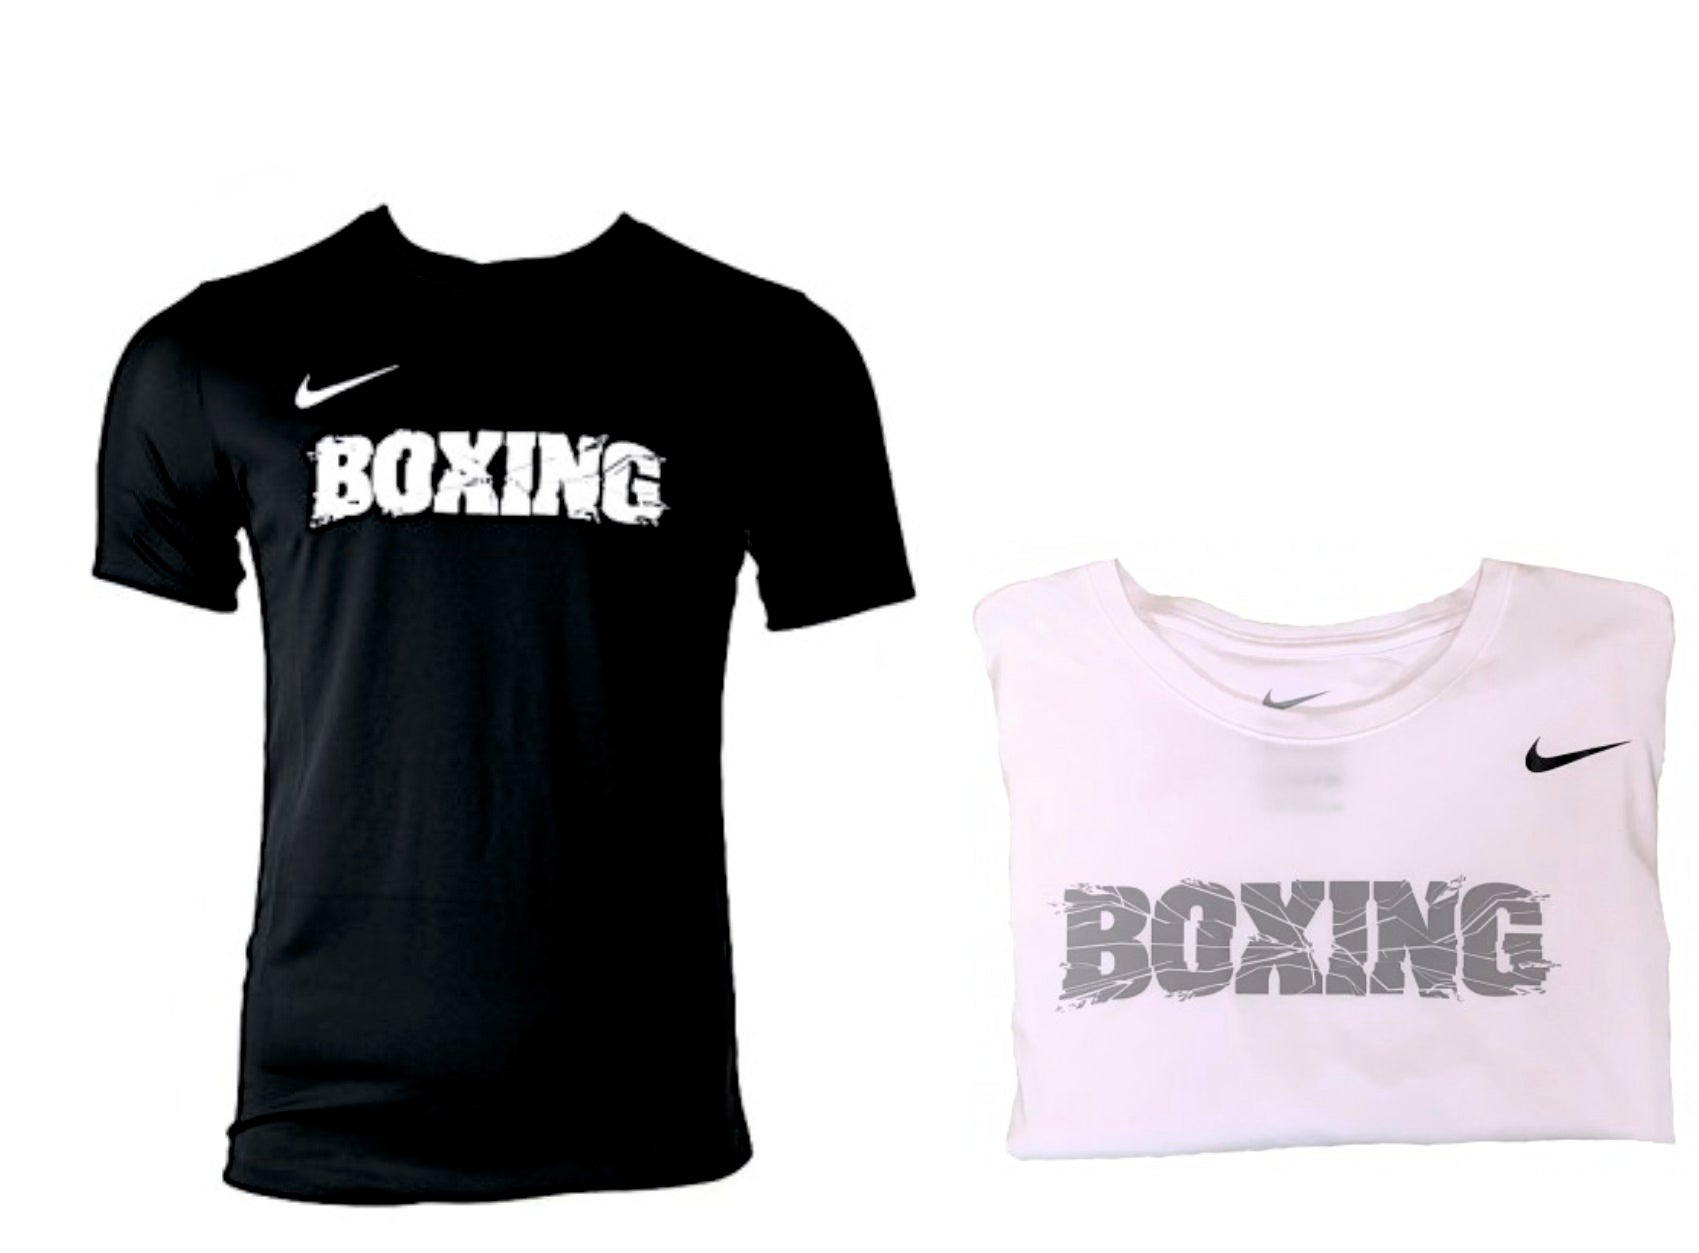 Nike T-Shirt Boxing